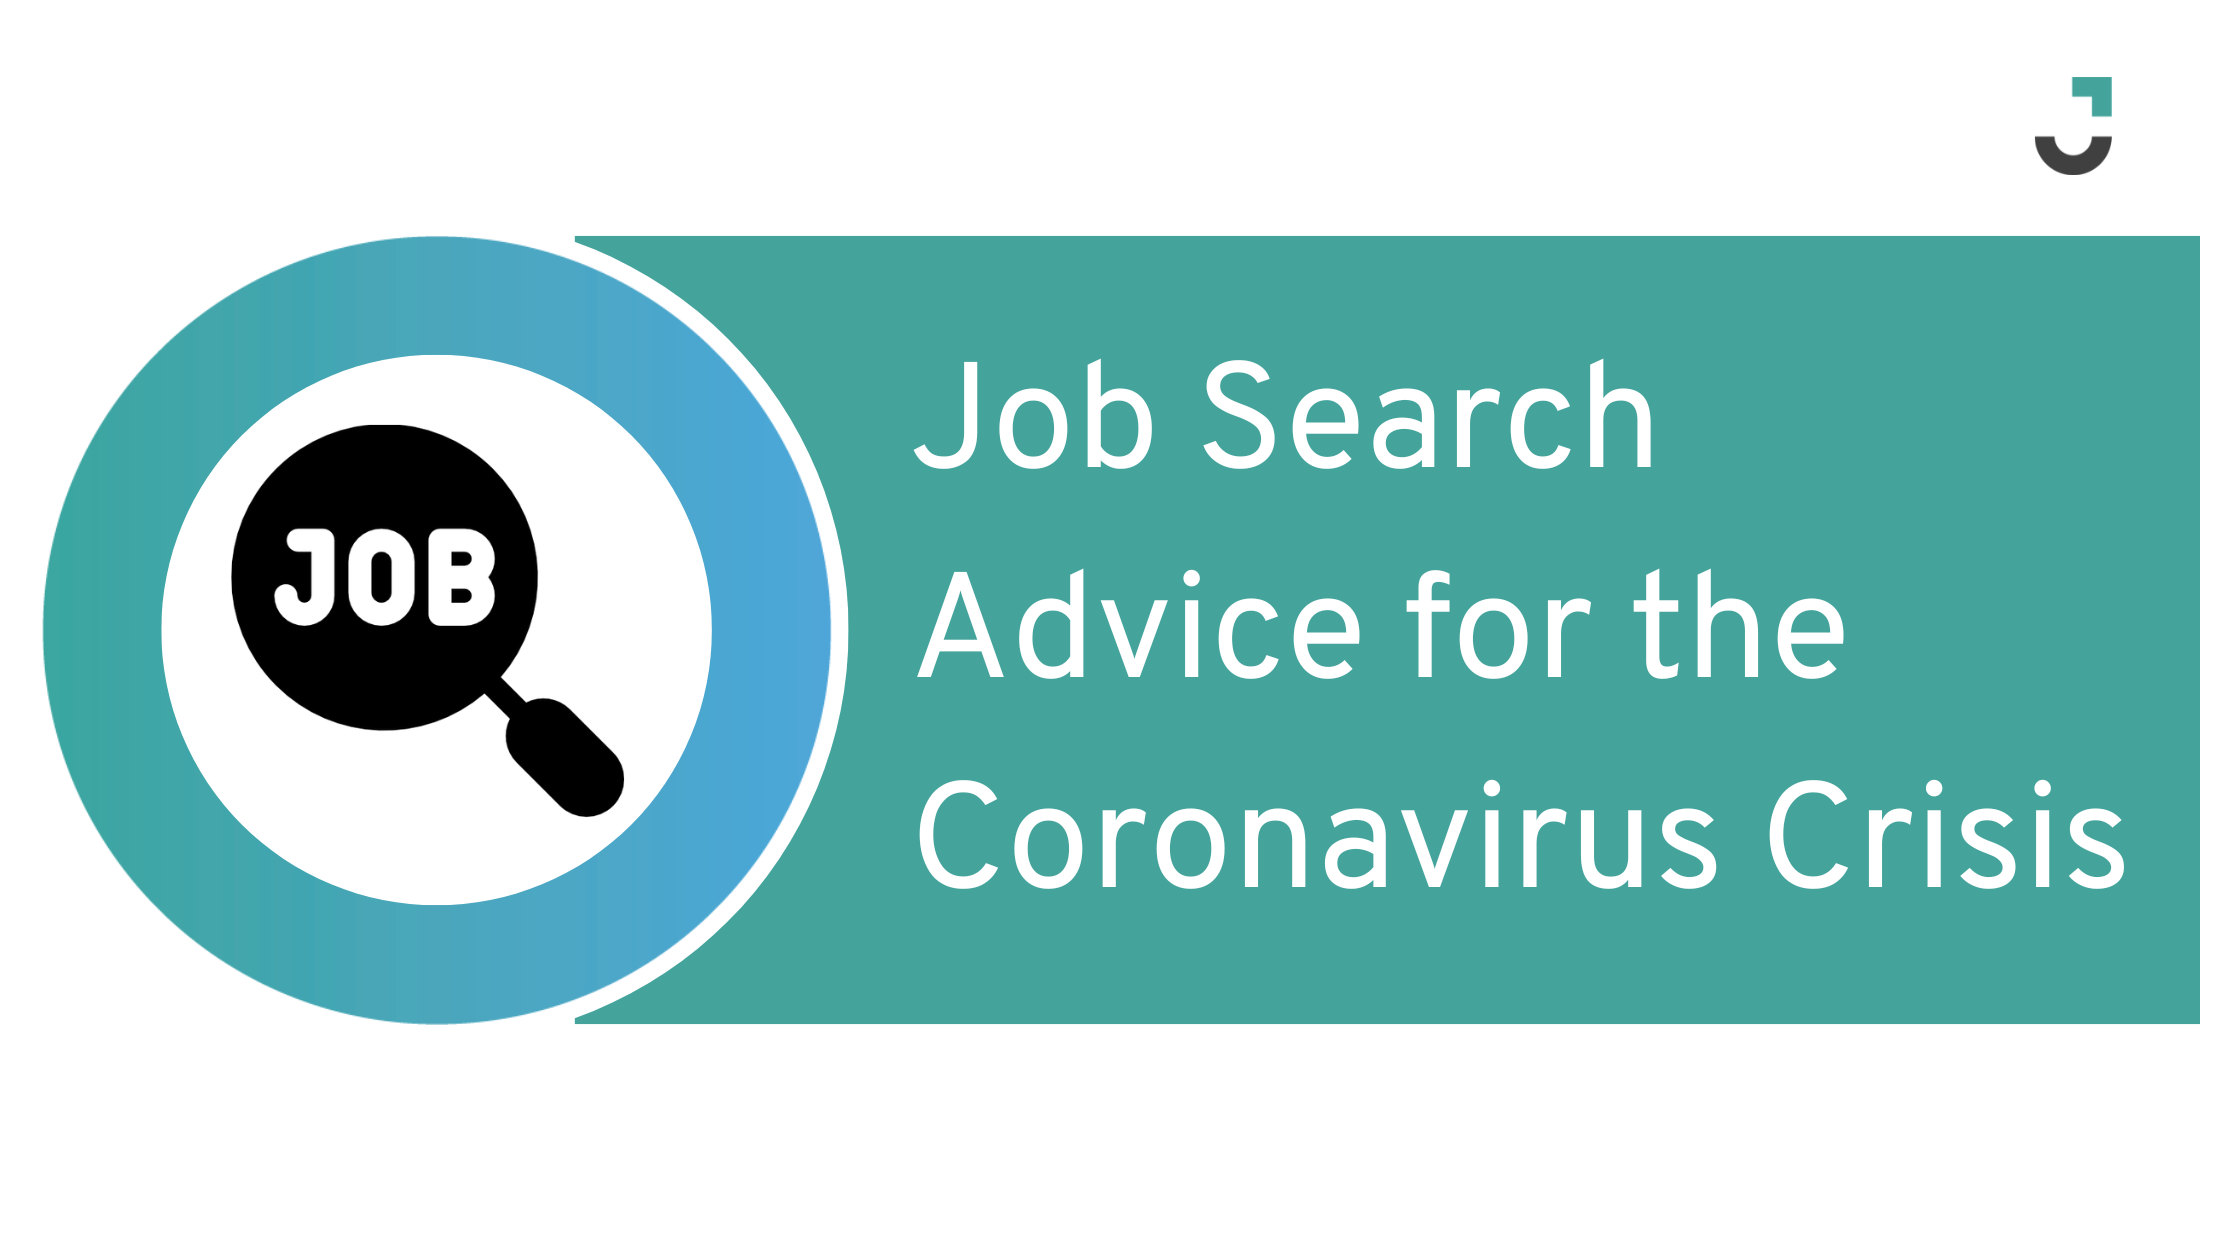 Job Search Advice for the Coronavirus Crisis